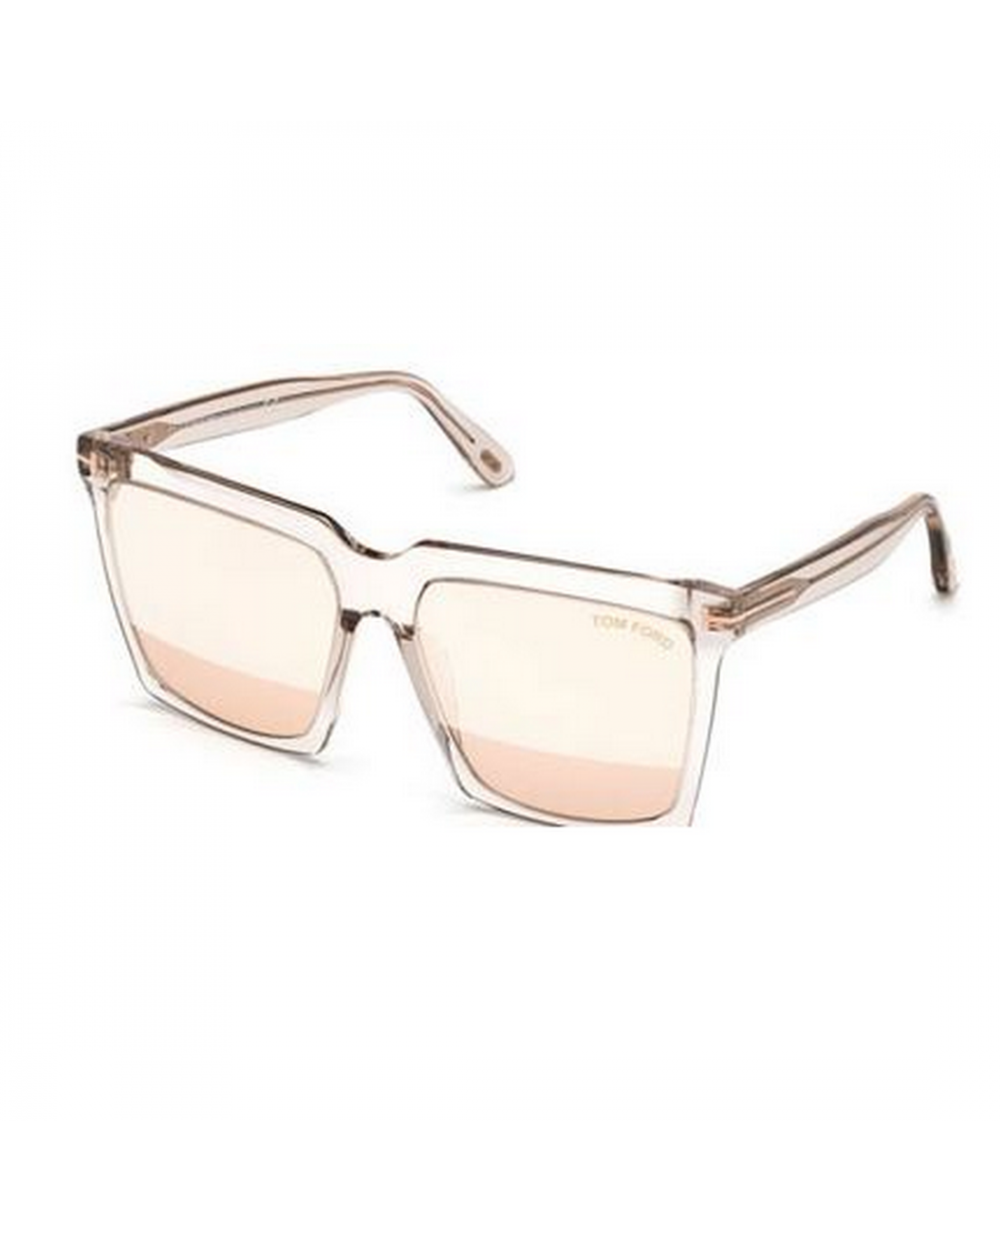 Sunglasses Tom Ford Ft 0625 S Original Warranty Optical Padula